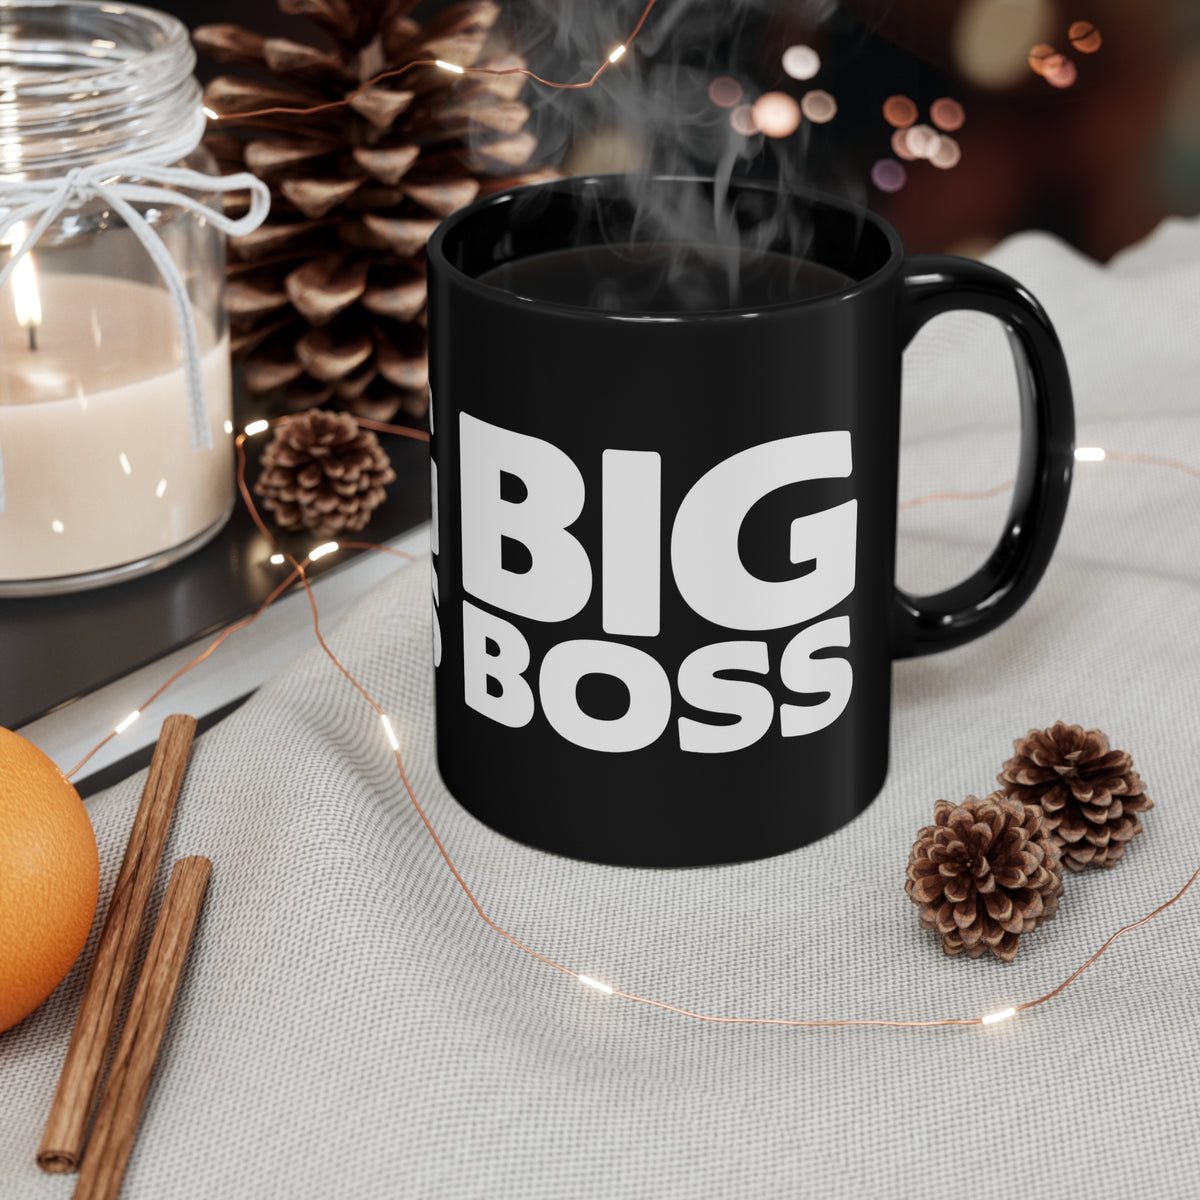 'Big Boss' Mug - Black